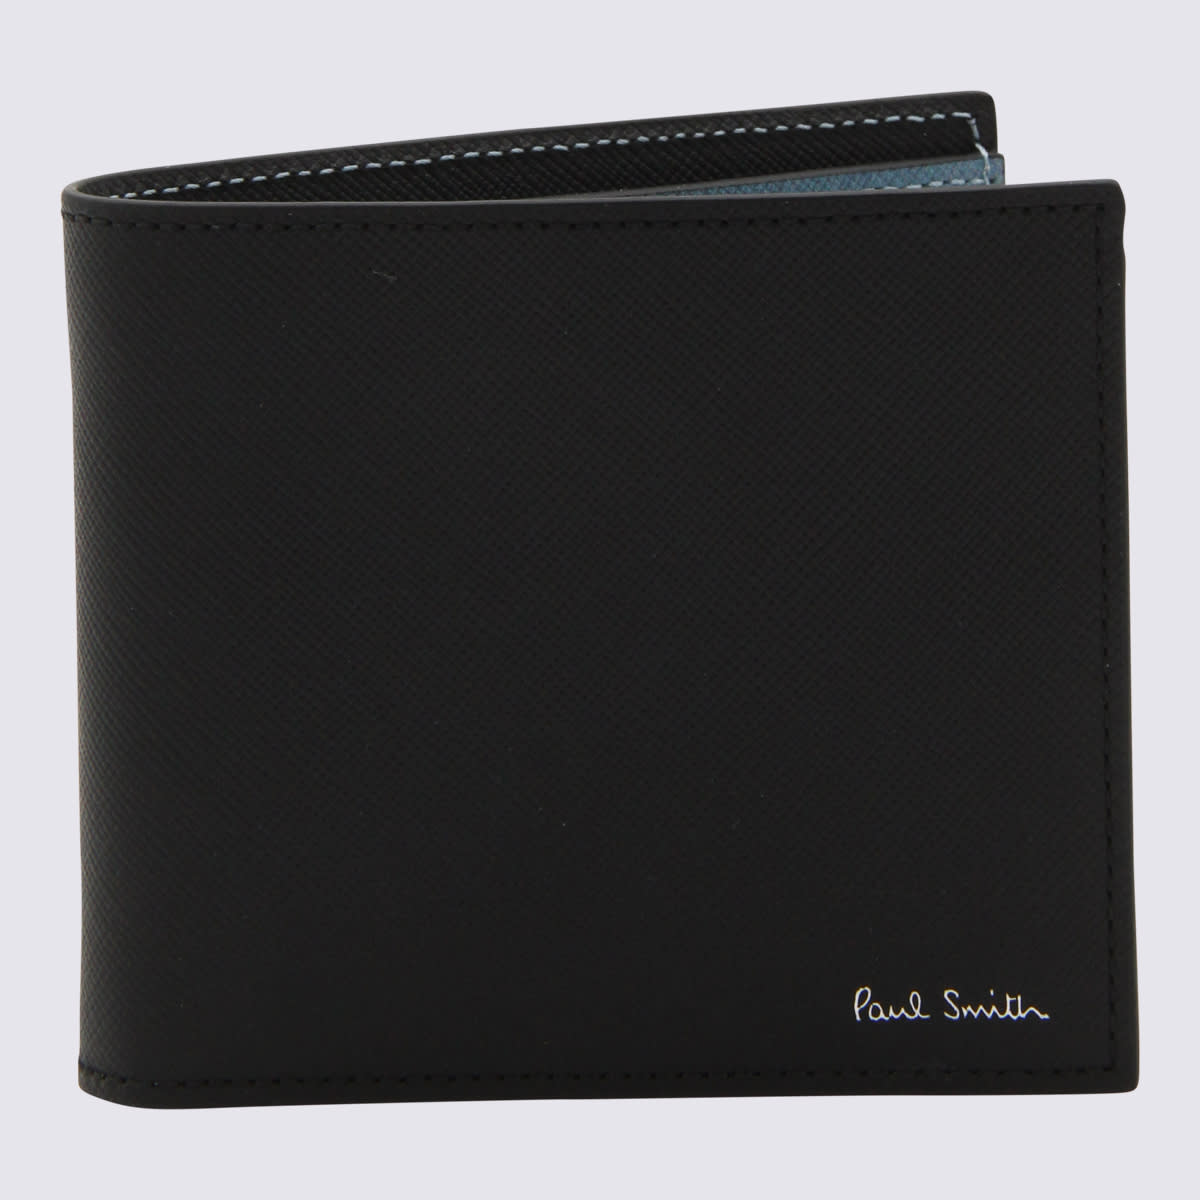 Paul Smith Black Multicolour Leather Wallet